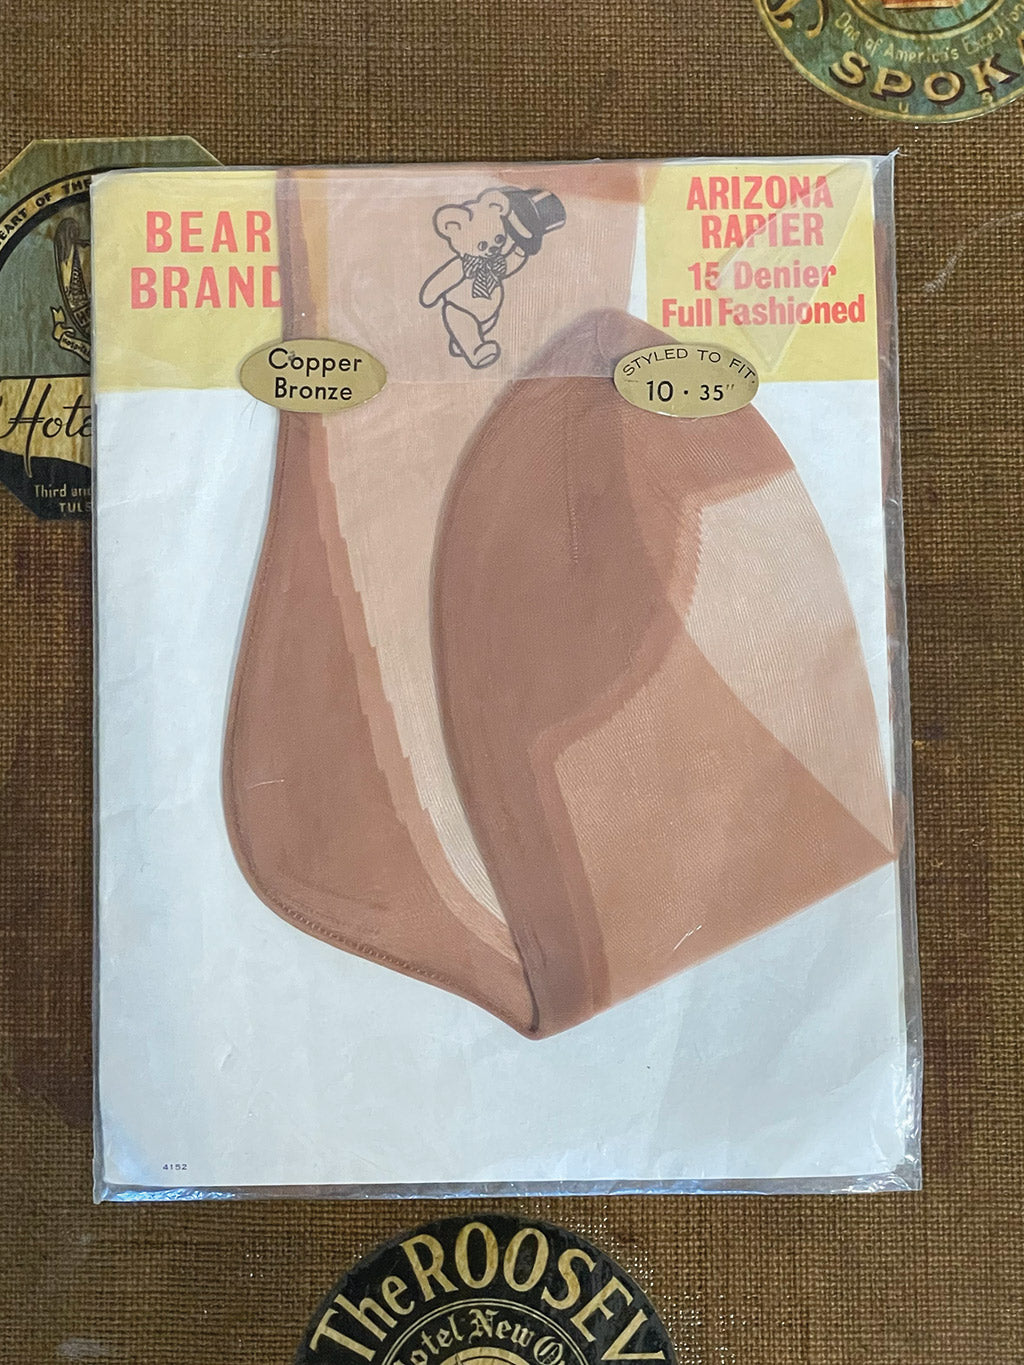 Vintage Bear Brand Arizona Fully Fashioned Stockings front